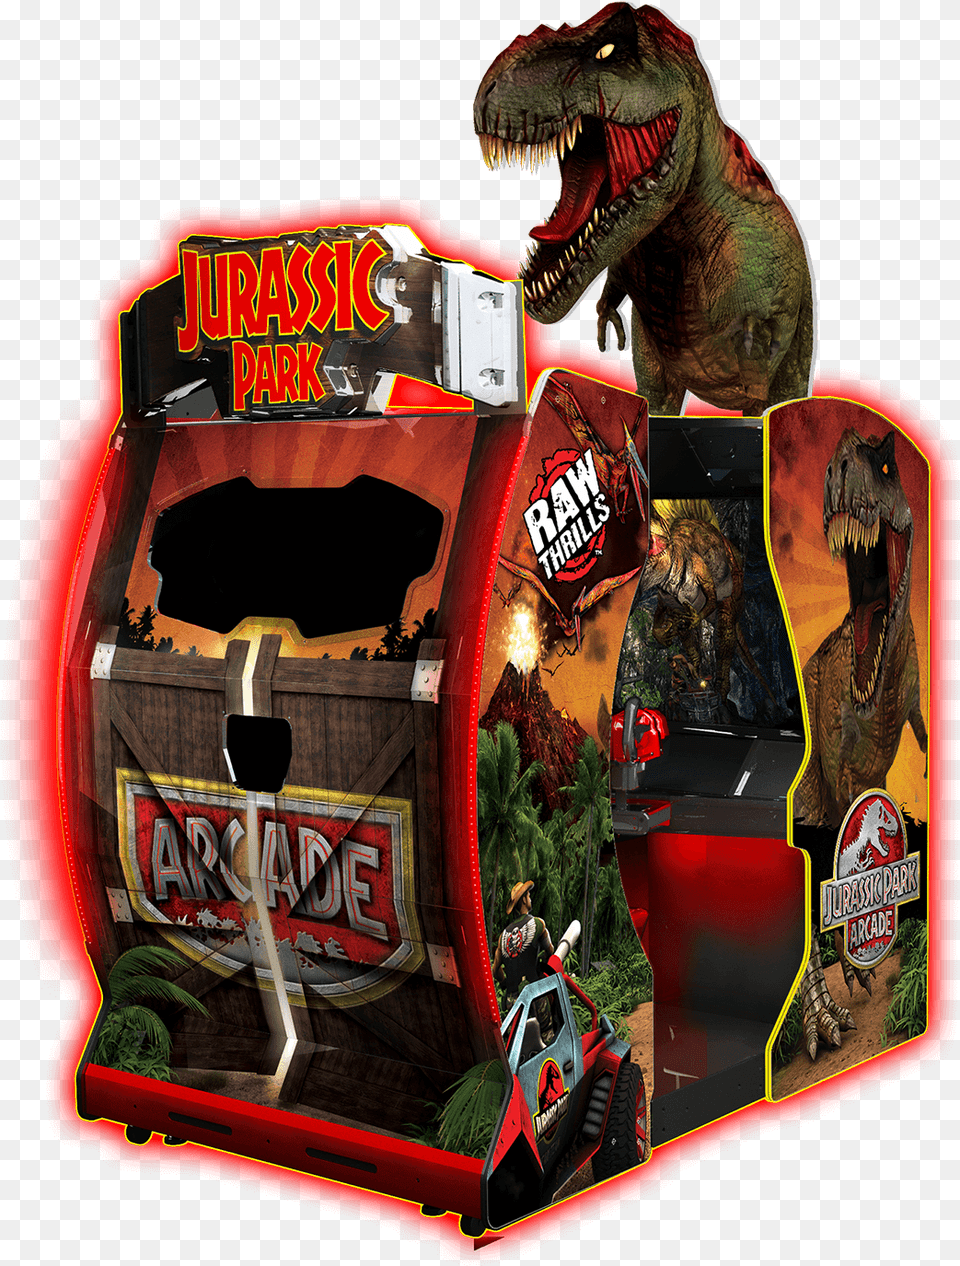 Jurassic Park Arcade Jurassic Park Arcade Game, Animal, Dinosaur, Reptile, Adult Png